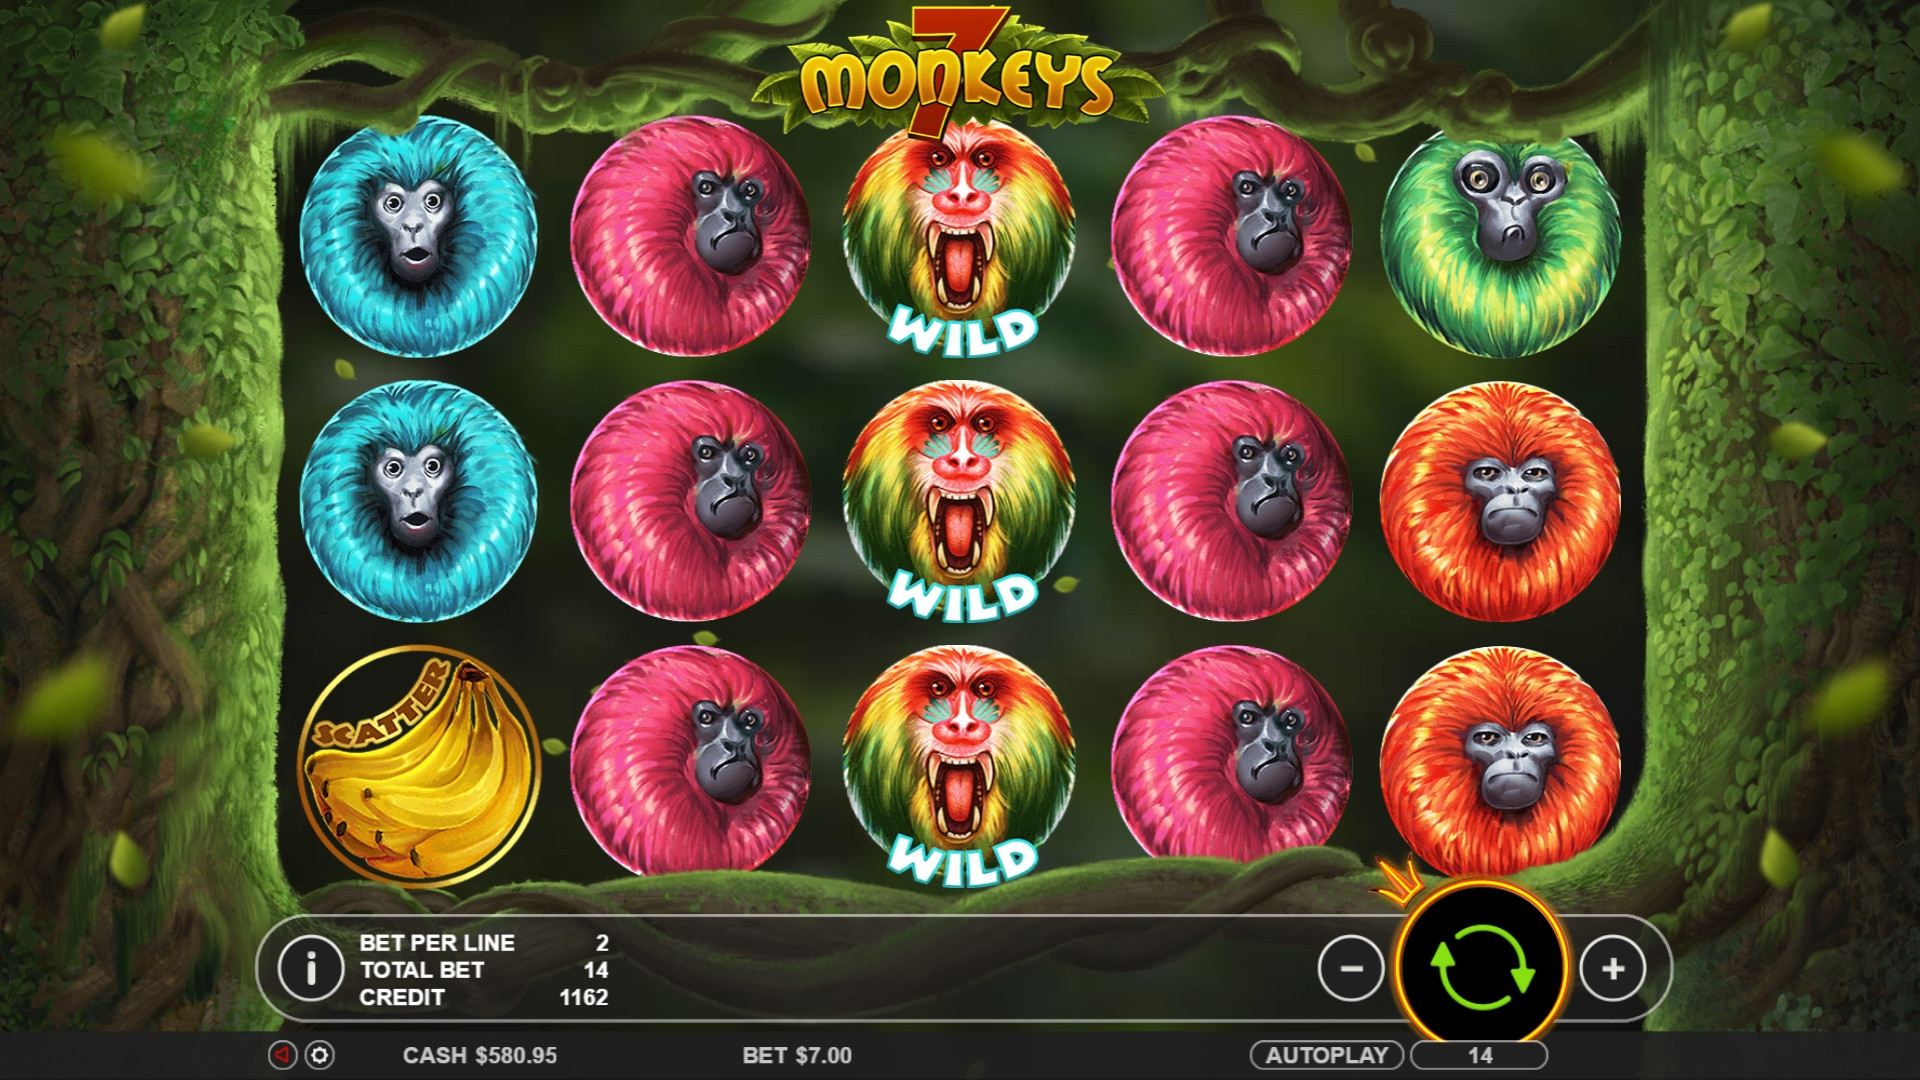 7 Monkeys (7 Monkeys) from category Slots